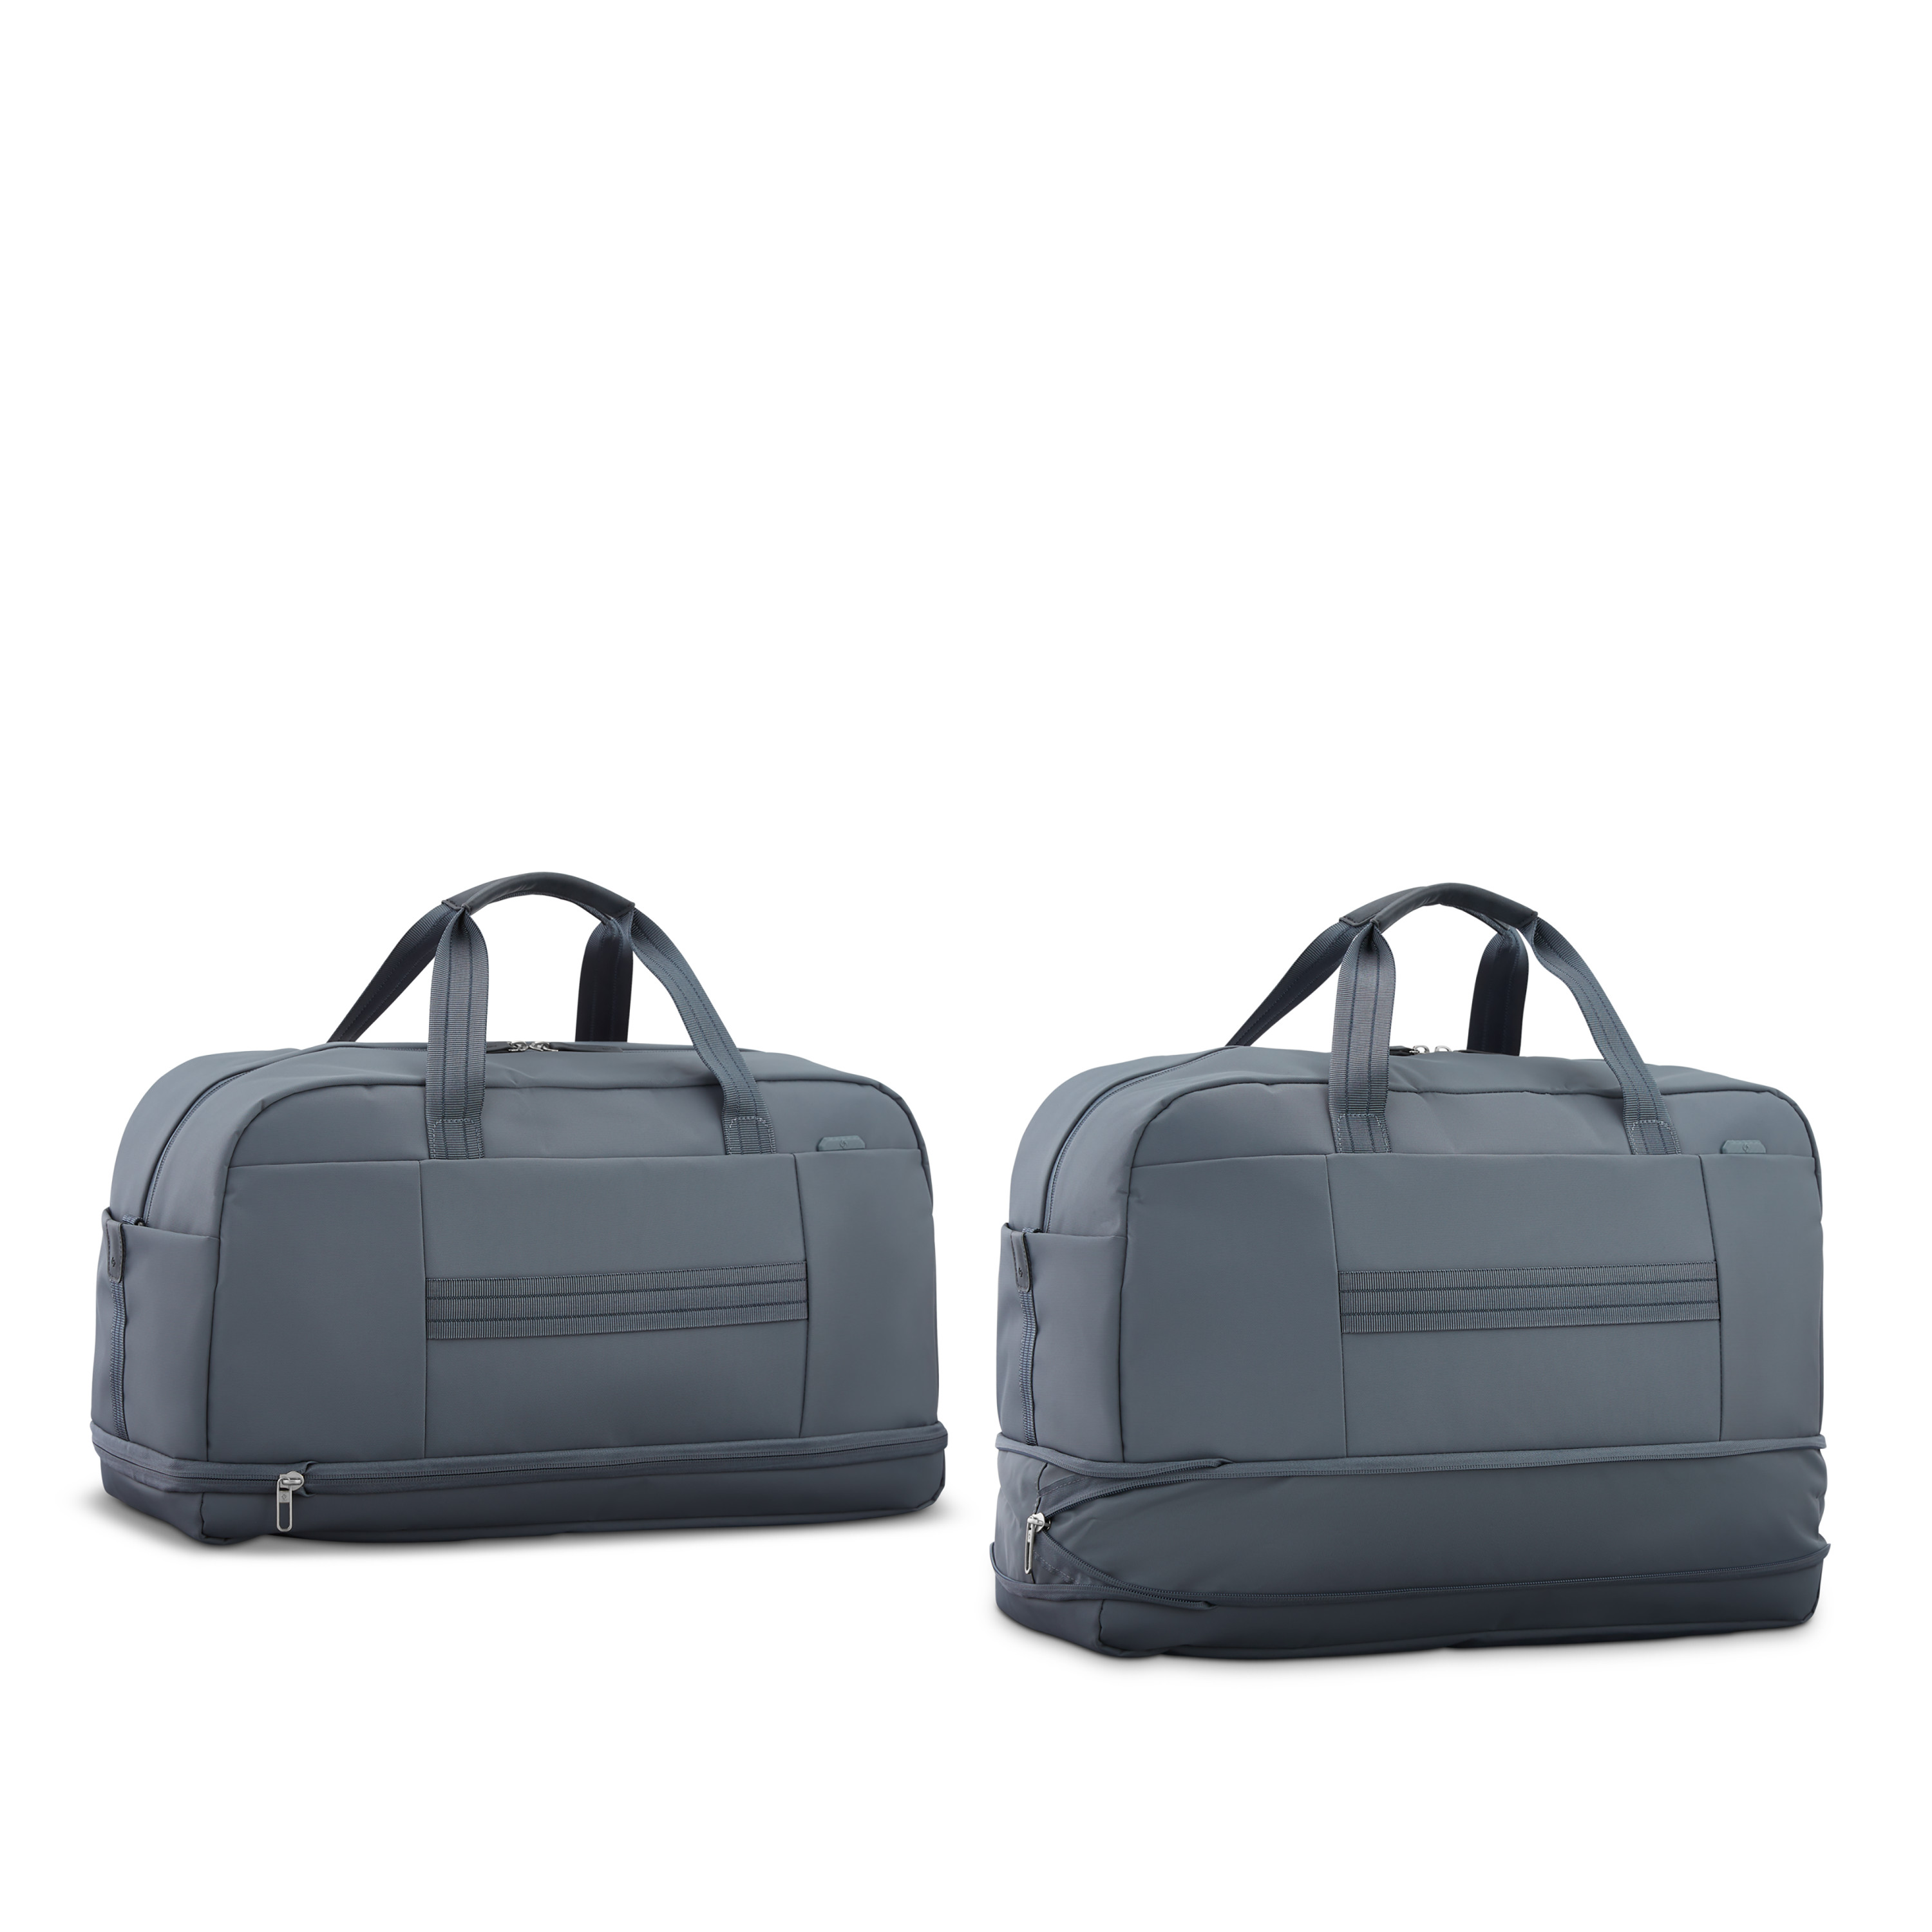 Shop SAMSONITE, Contoured 3D Ridges Lumbar Pi – Luggage Factory